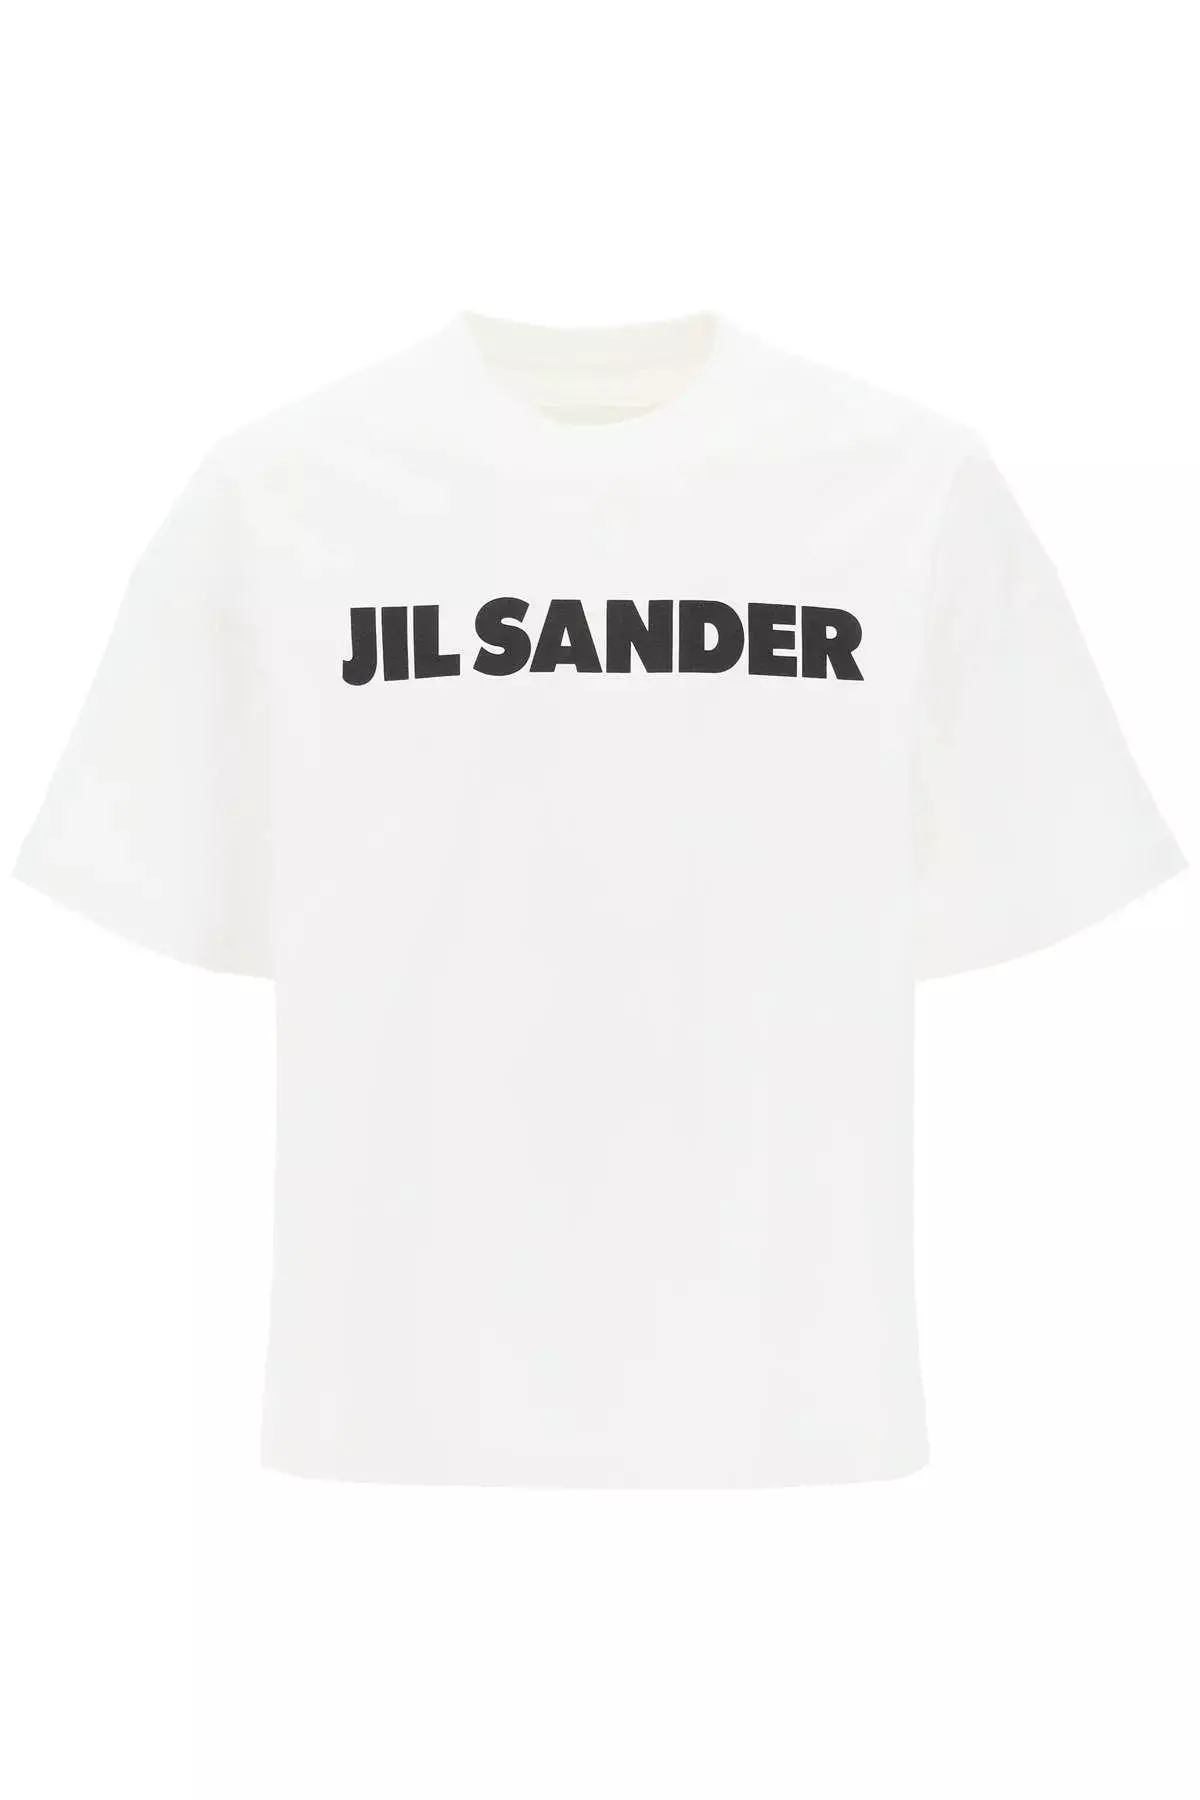 t-shirts_jil-sander_bianco_232457uts000001-102p-3